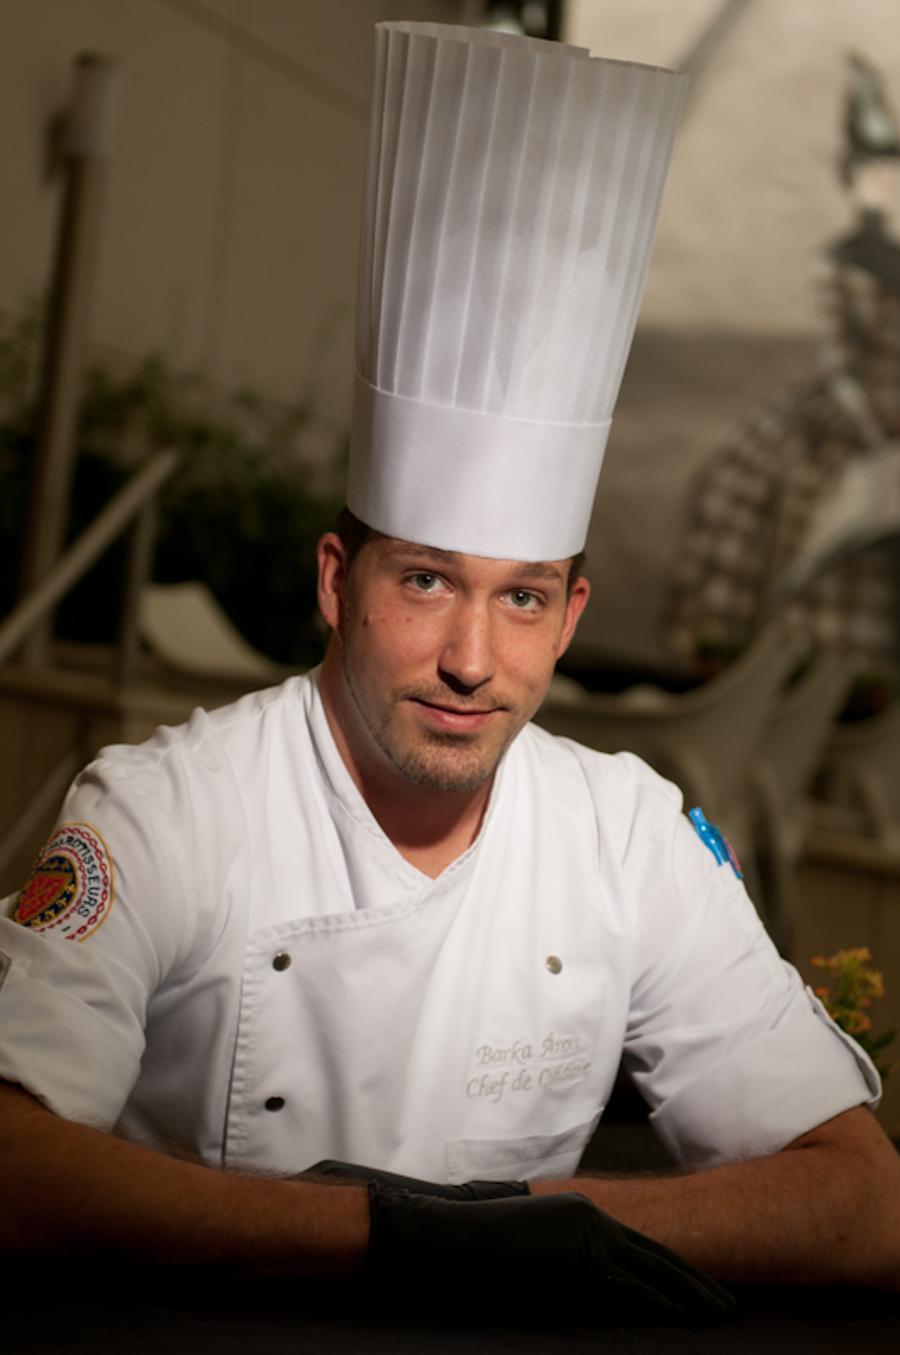 Áron Barka, Chef De Cuisine, Araz Restaurant, Continental Hotel Budapest